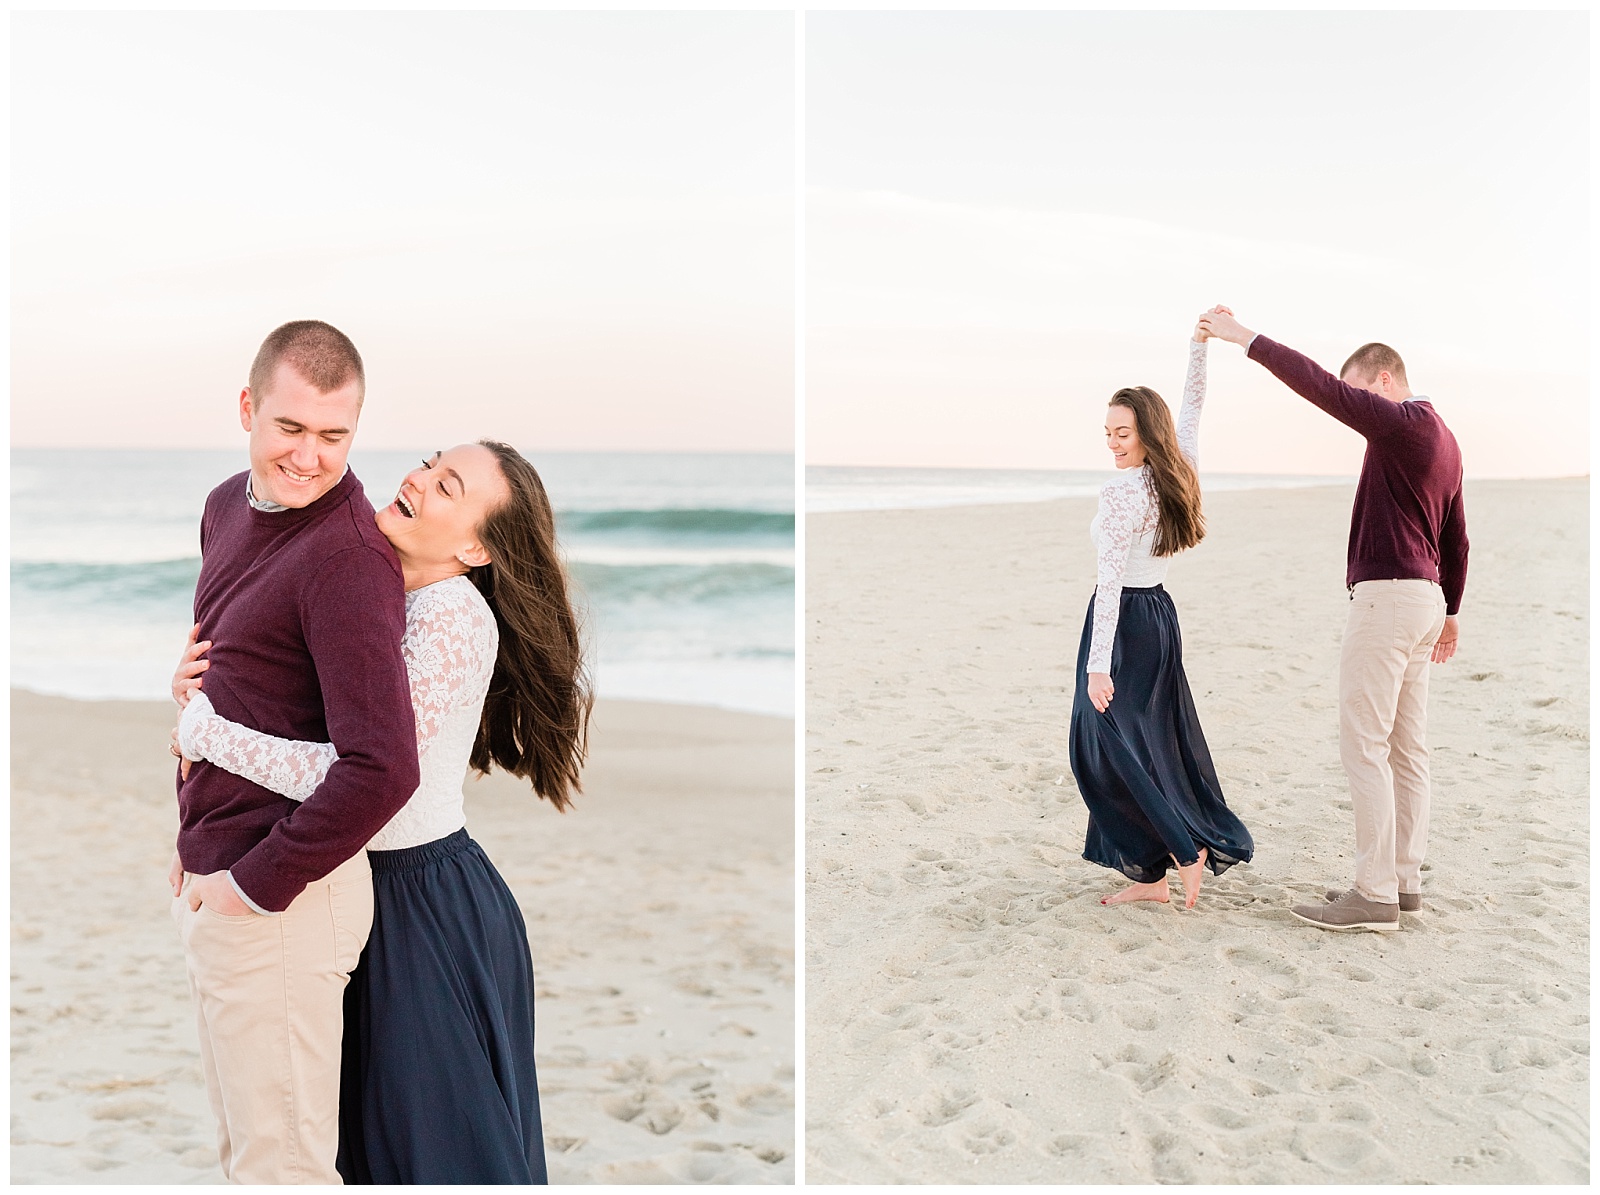 New Jersey, Engagement Session, Wedding Photographer, Beach, Sunset, Shore, Joy, Laughter, Ocean